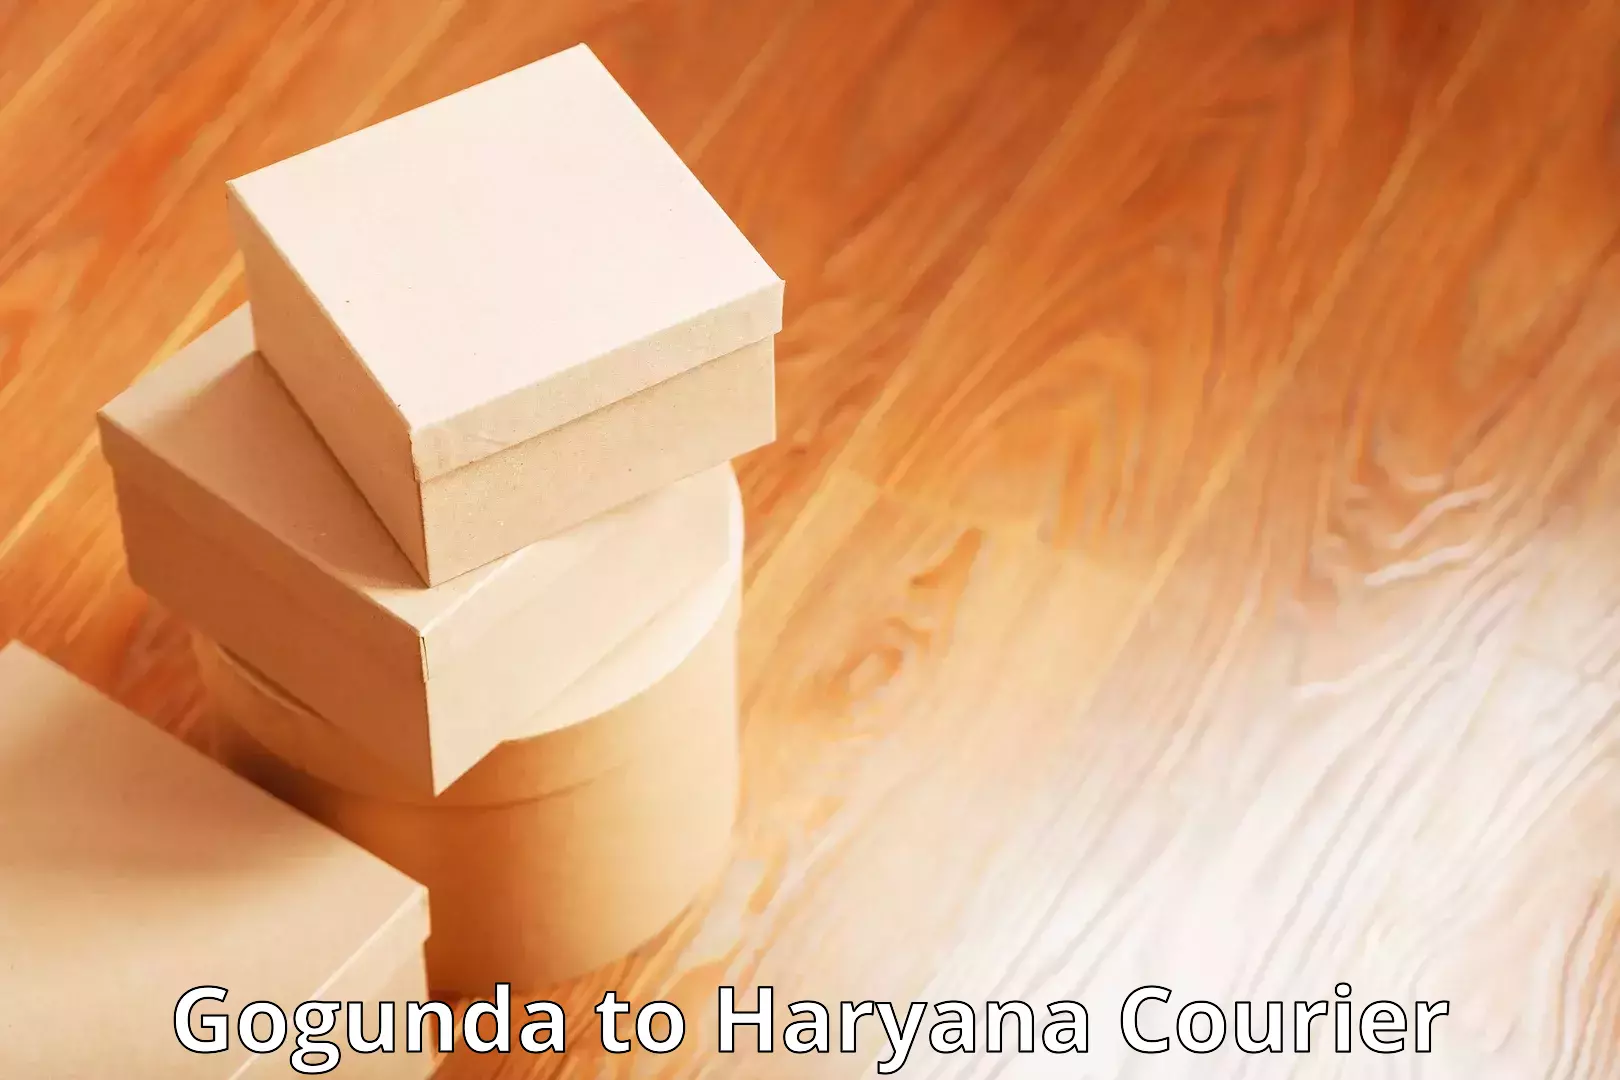 Modern courier technology Gogunda to Hansi